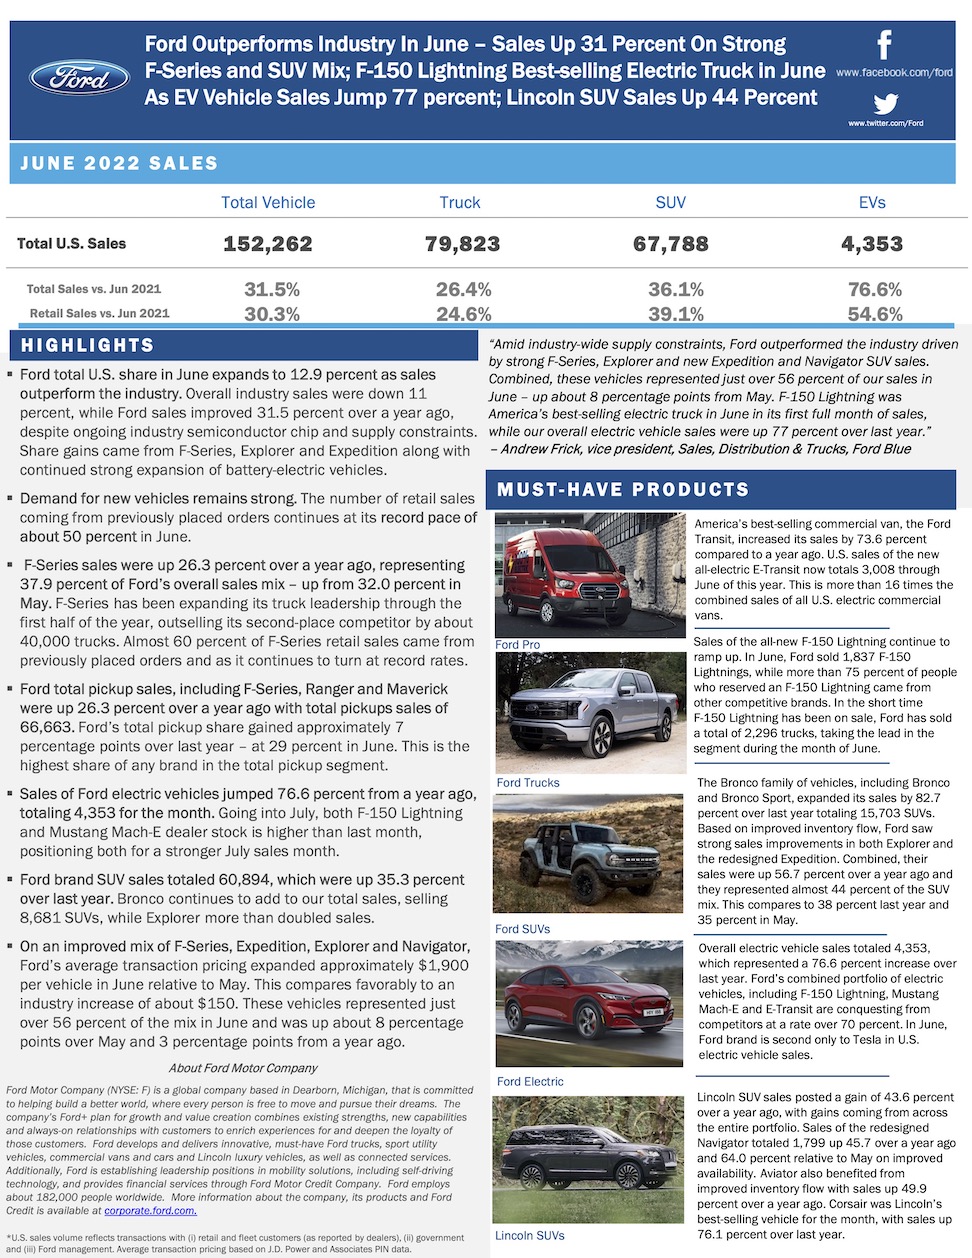 Ford June 2022 Sales Report Summary.jpg